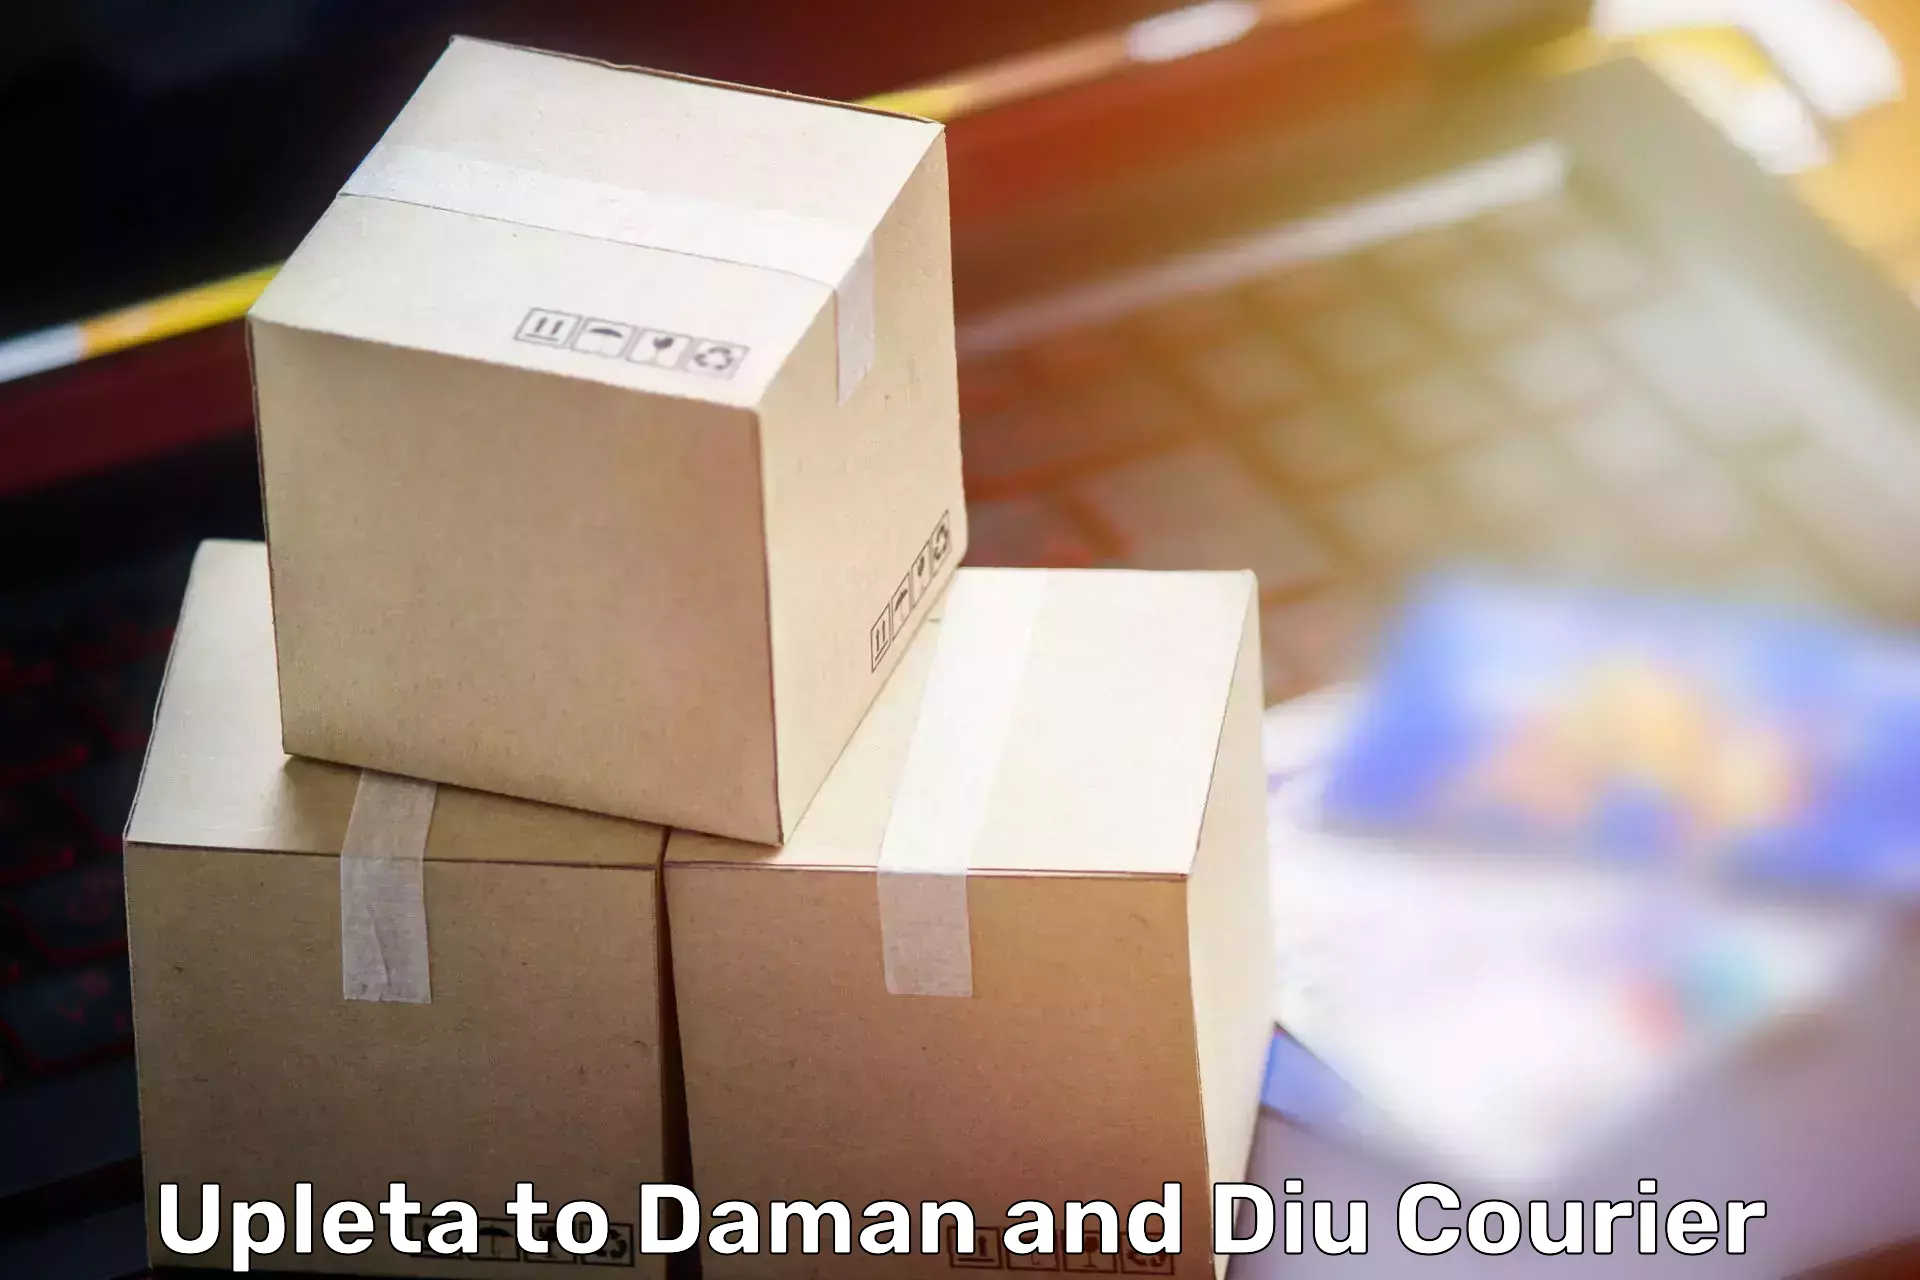 Home shifting experts Upleta to Daman and Diu